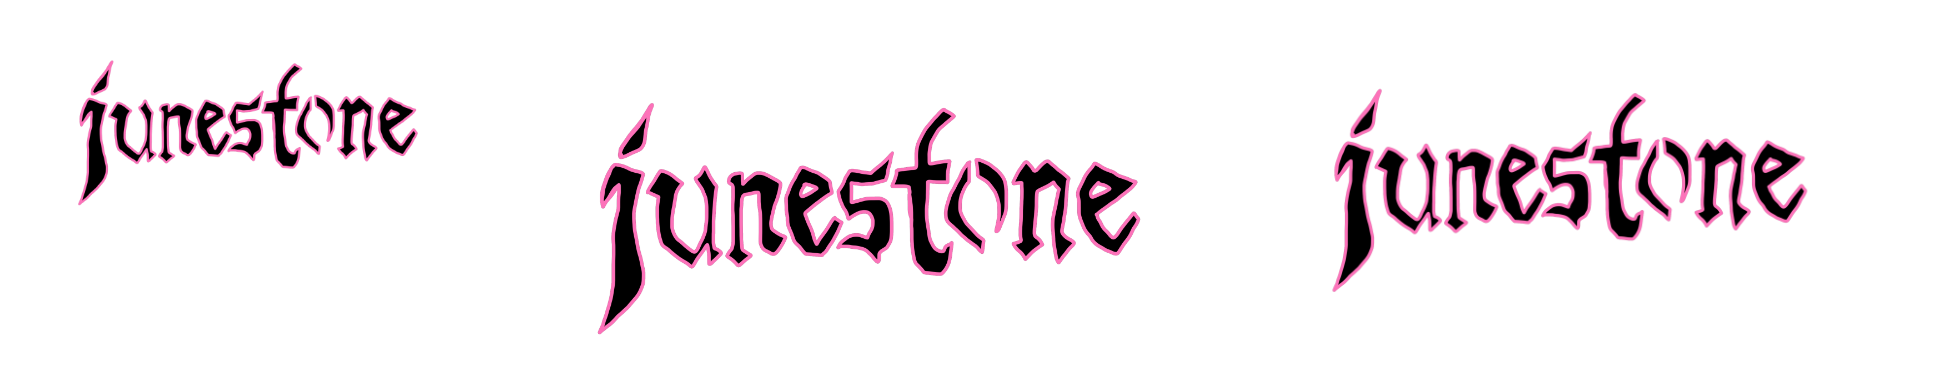 junestone